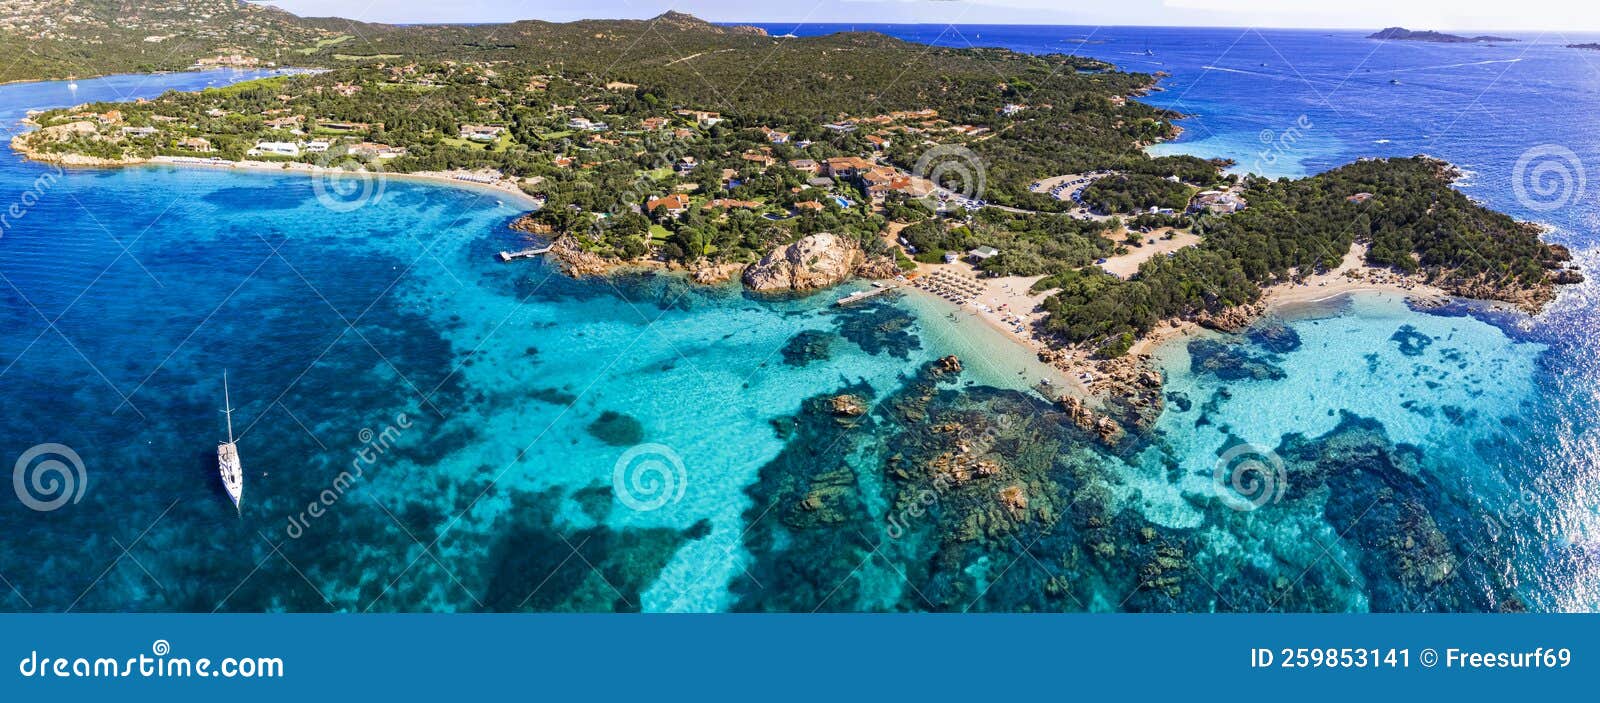 sardegna island, best beaches of costa smeralda. aerial shot